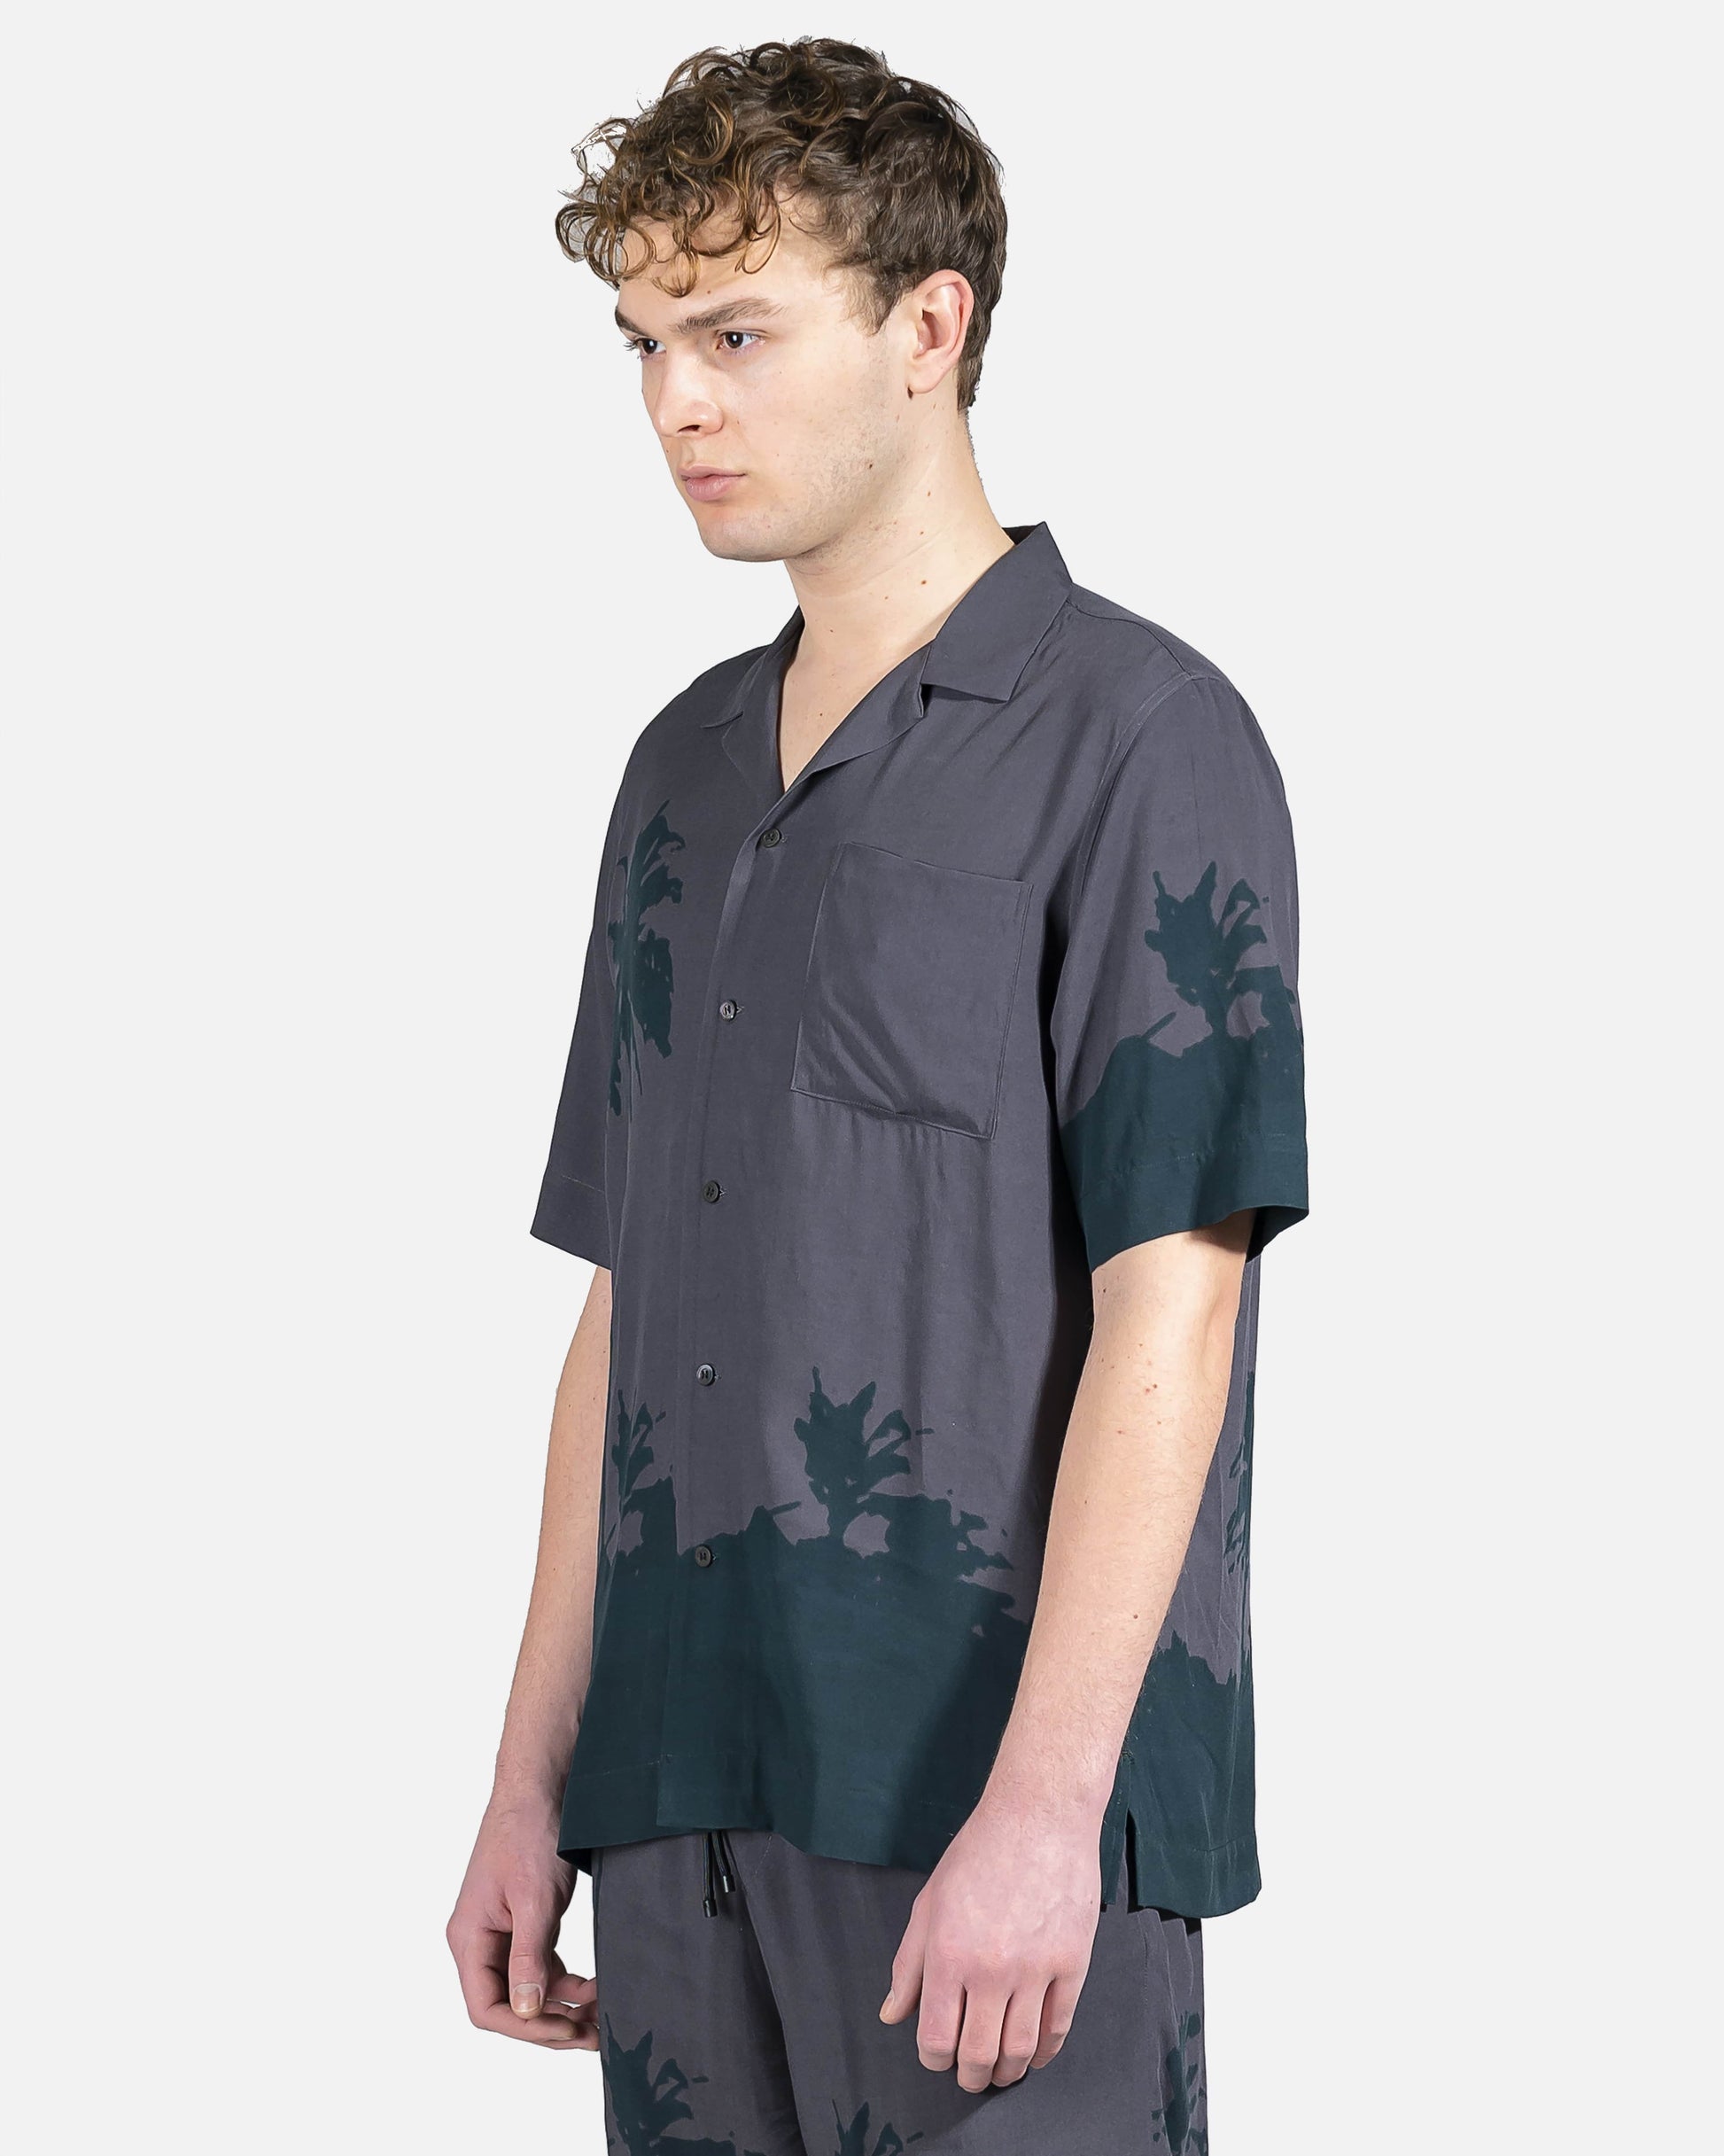 Dries Van Noten Men's Shirts Carltone Button Up in Grey